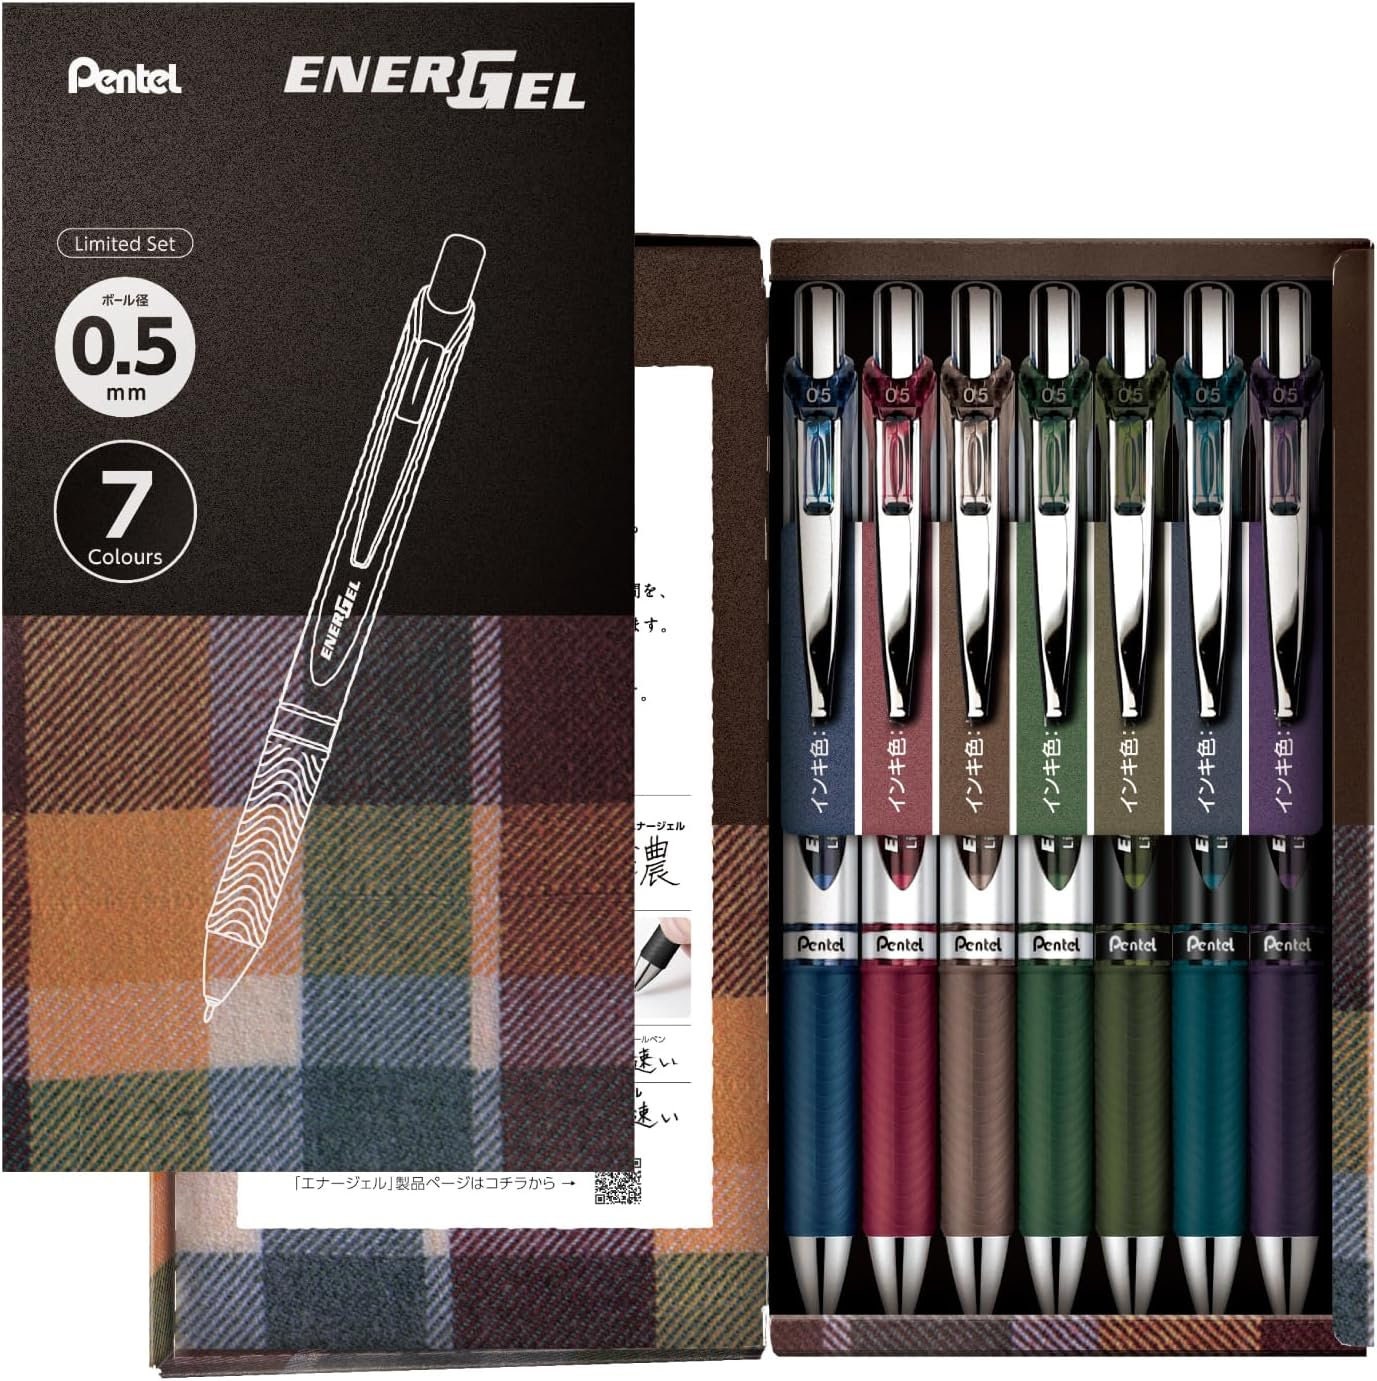 Pentel Energel Limited Edition 0.5mm 7 Pens Box Set. 